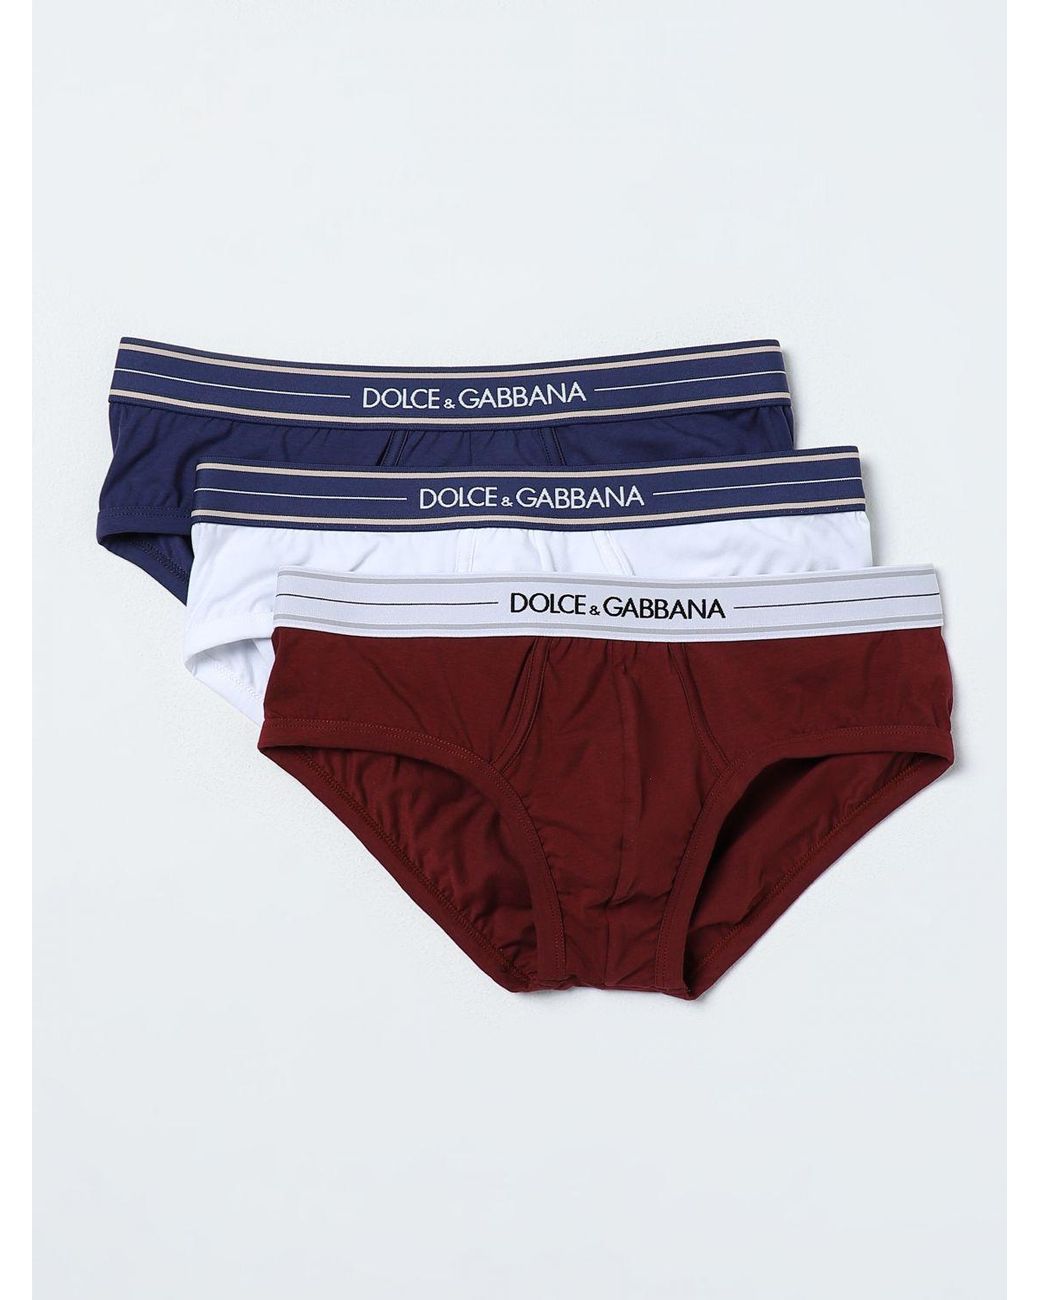 https://cdna.lystit.com/1040/1300/n/photos/giglio/9f05c9d0/dolce-gabbana-Multicolor-Underwear.jpeg